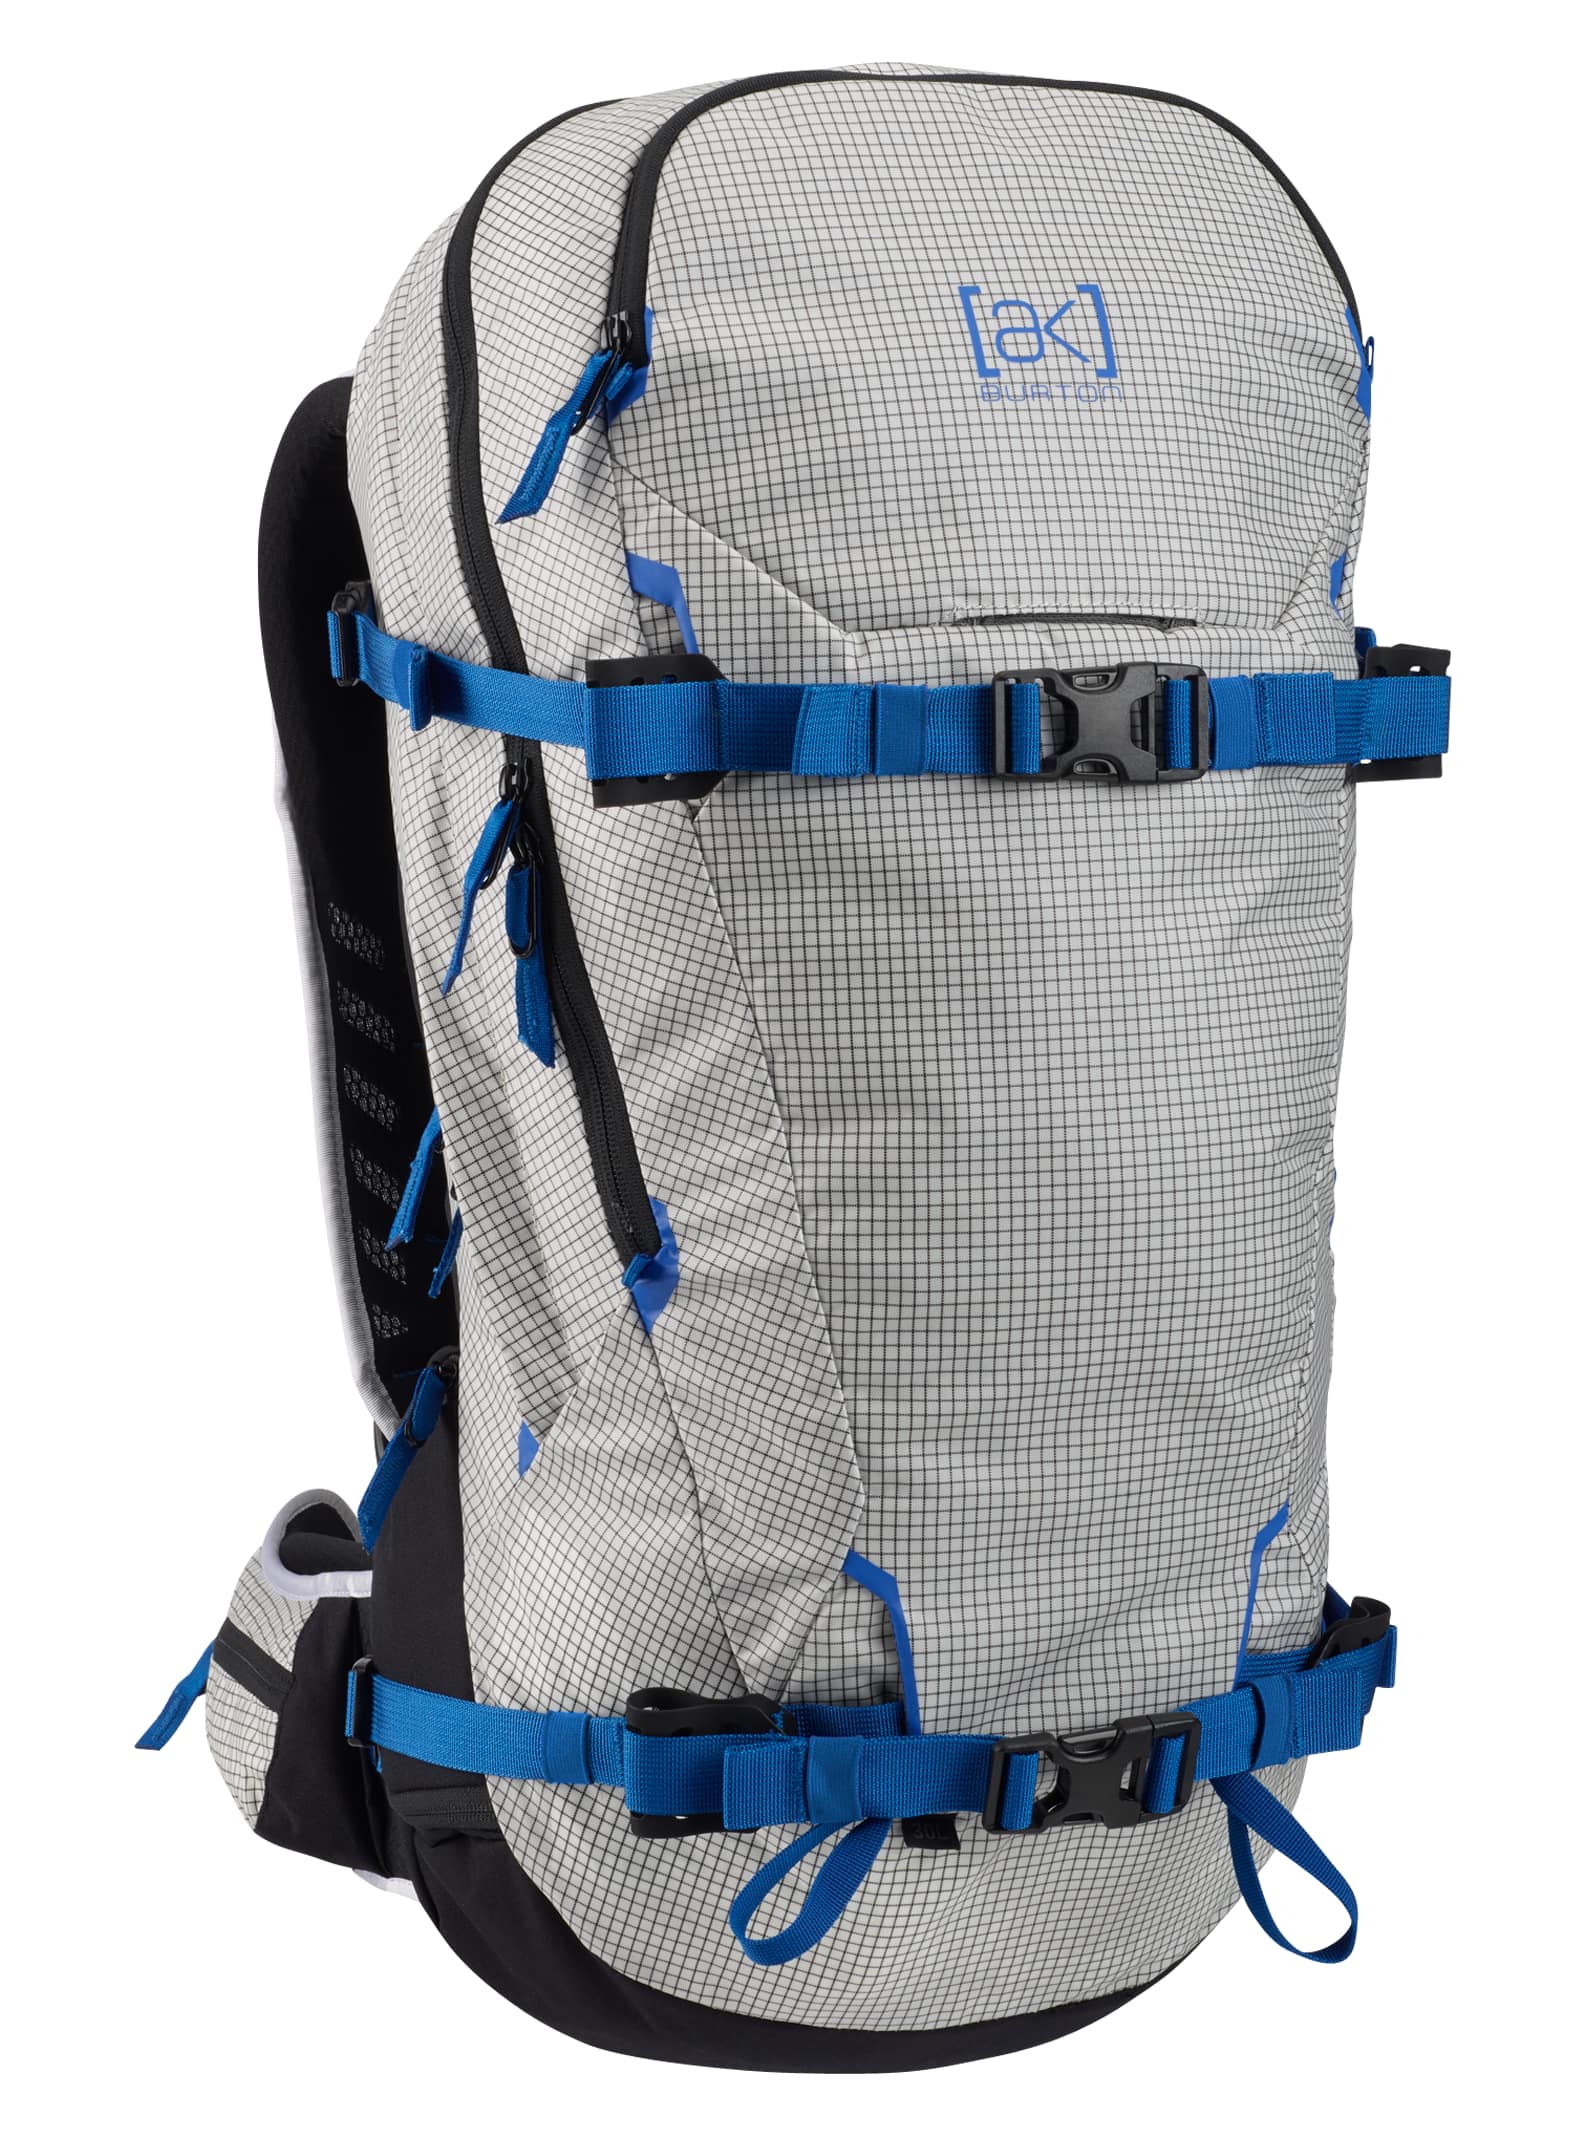 Burton [ak] Incline 30L Backpack | Burton.com Spring 2021 US